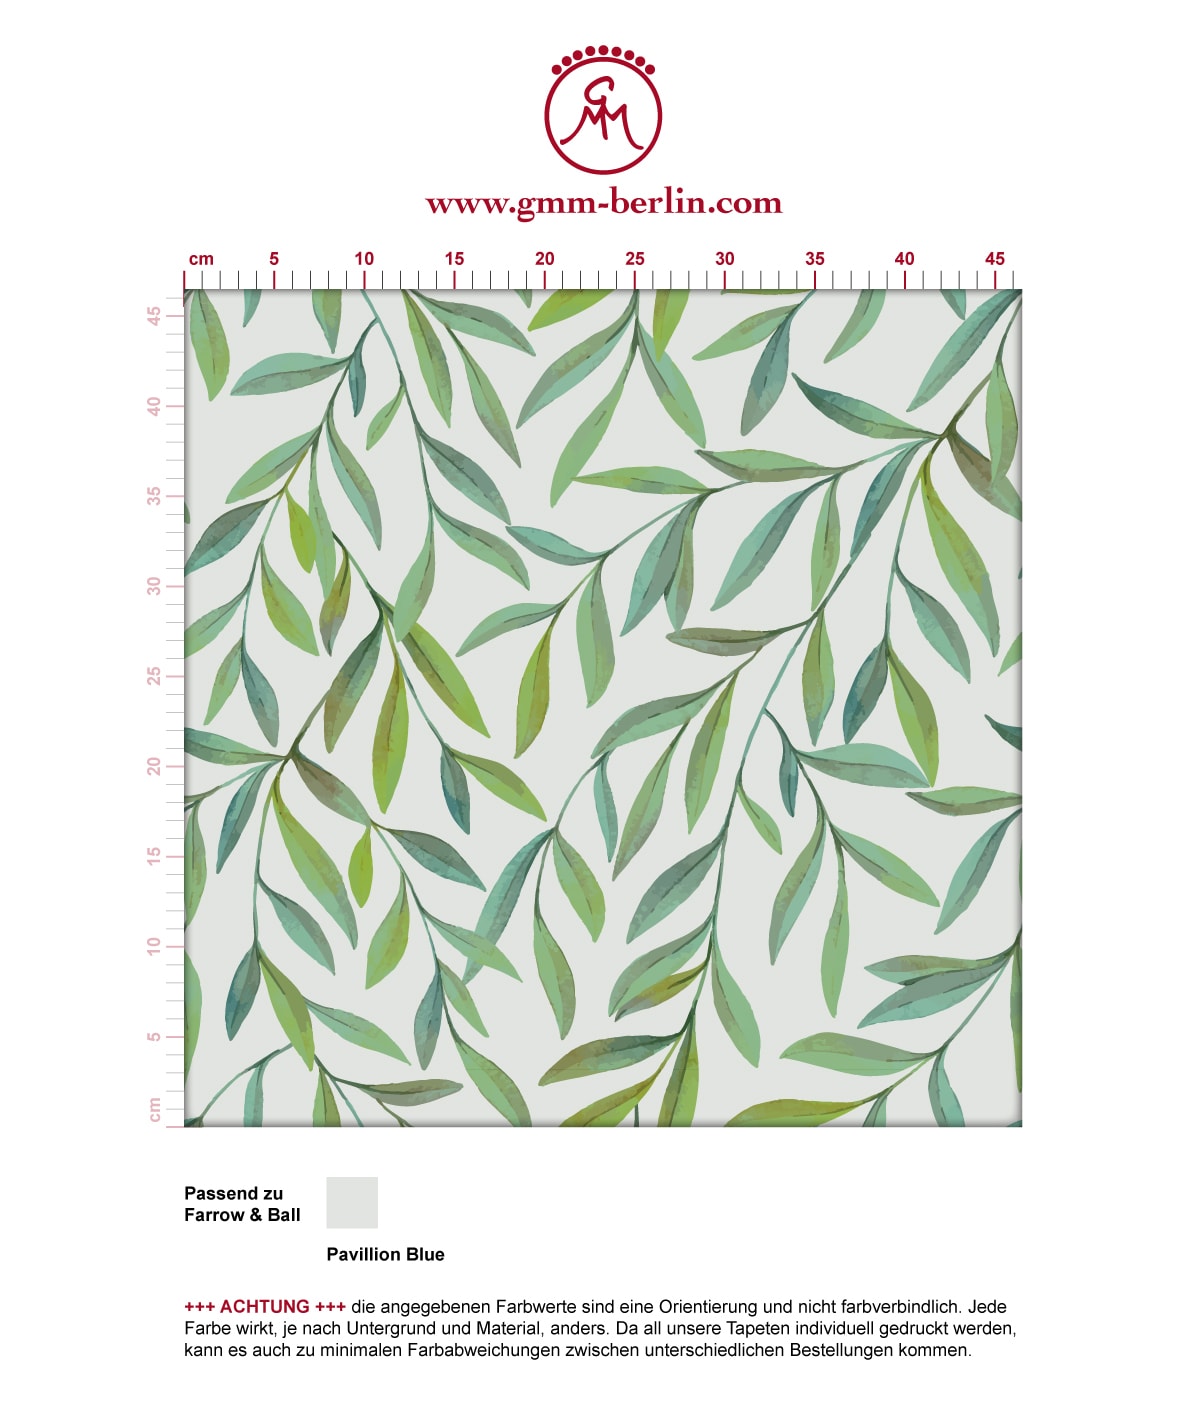 Zarte schöne Weiden Tapete "Magic Willow" mit Blätter Dekor auf grau angepasst an Farrow and Ball Wandfarben. Aus dem GMM-BERLIN.com Sortiment: Schöne Tapeten in der Farbe: grün